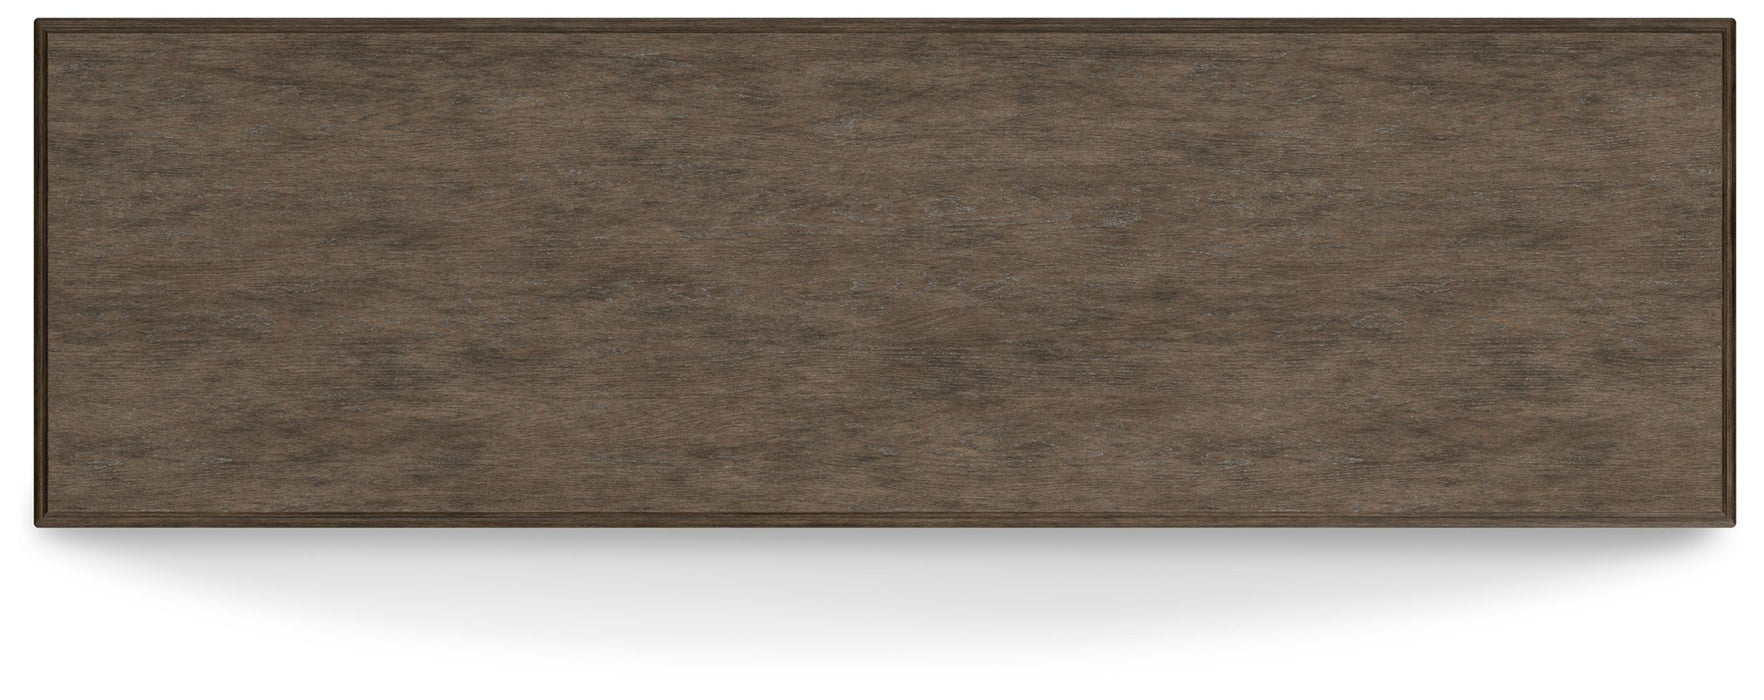 Janismore - Weathered Gray - Credenza Unique Piece Furniture